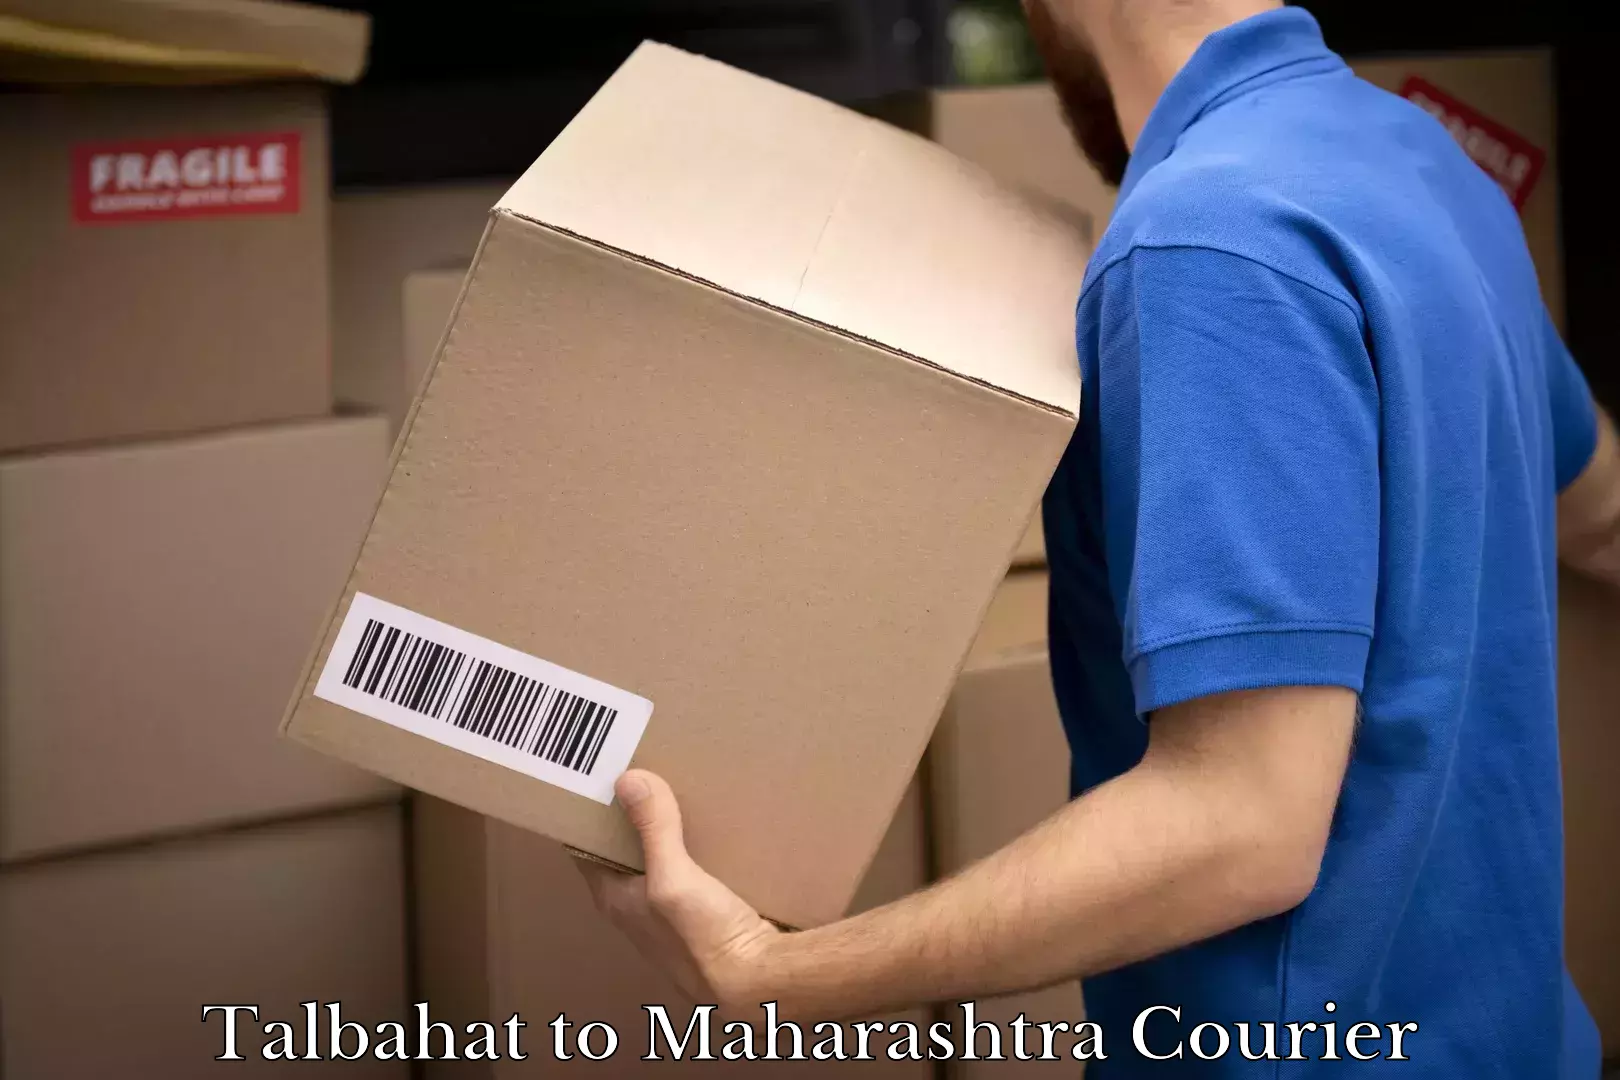 Parcel handling and care Talbahat to Maharashtra